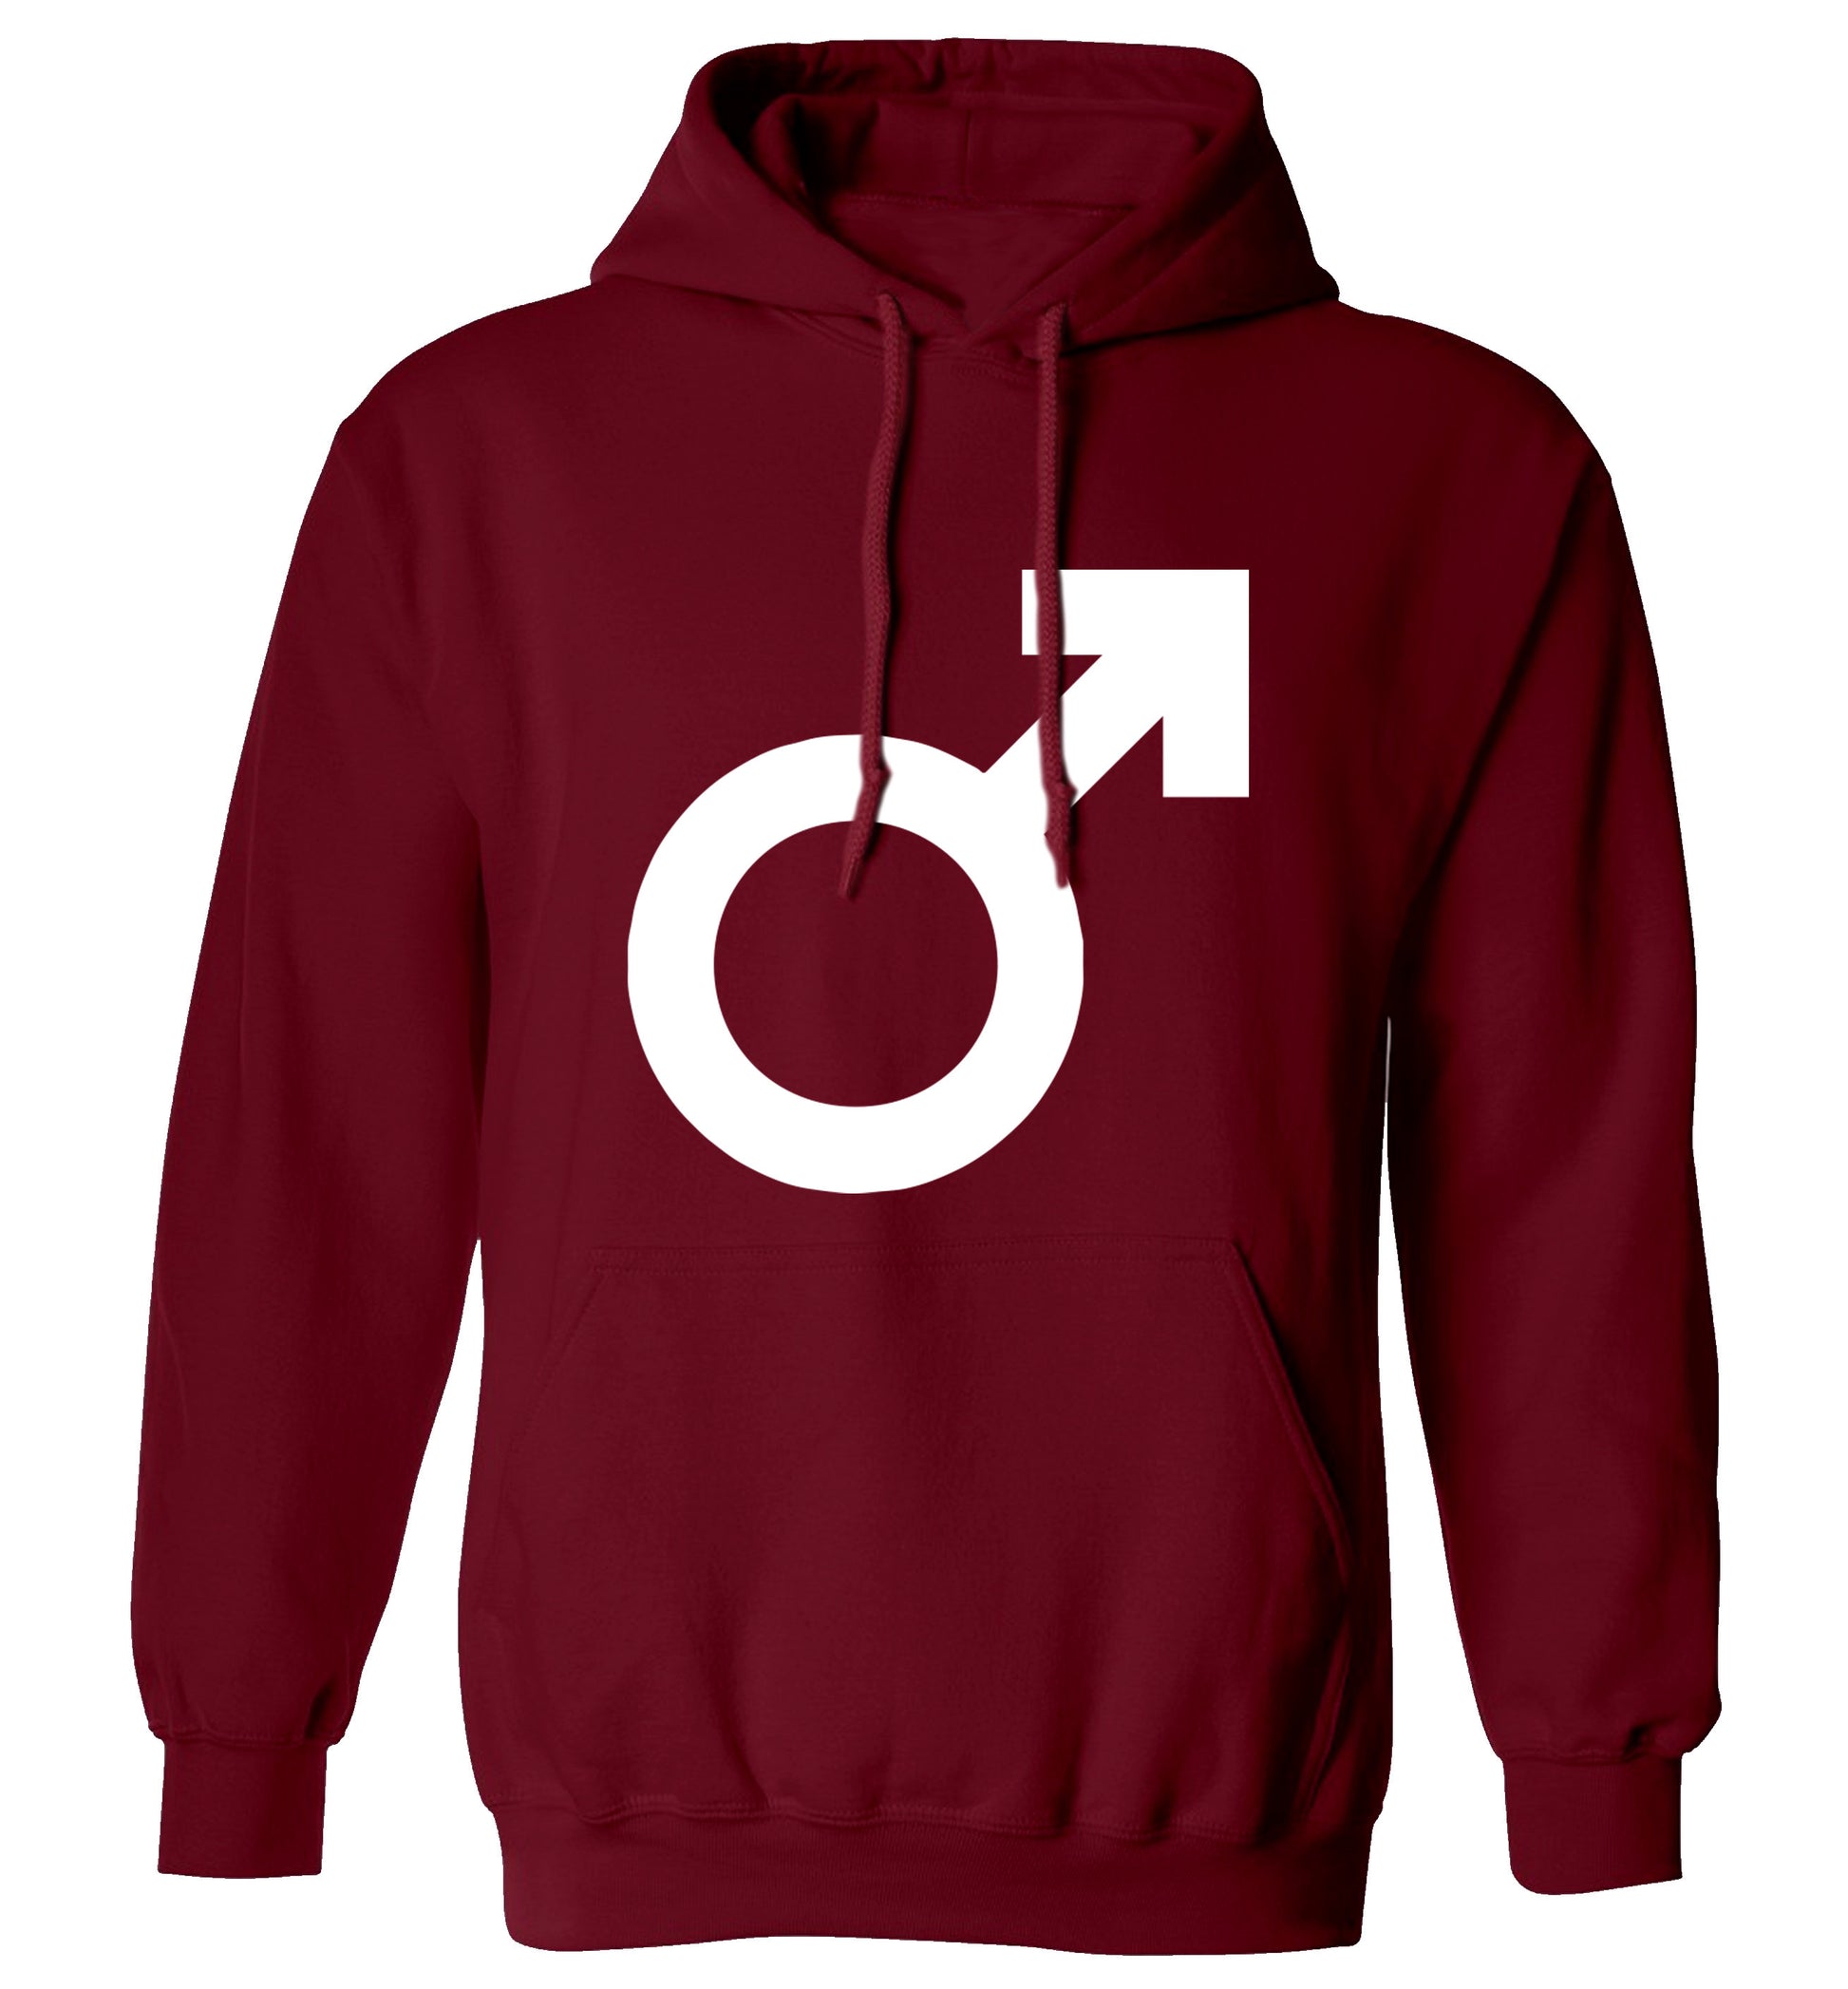 Male symbol large adults unisex maroon hoodie 2XL